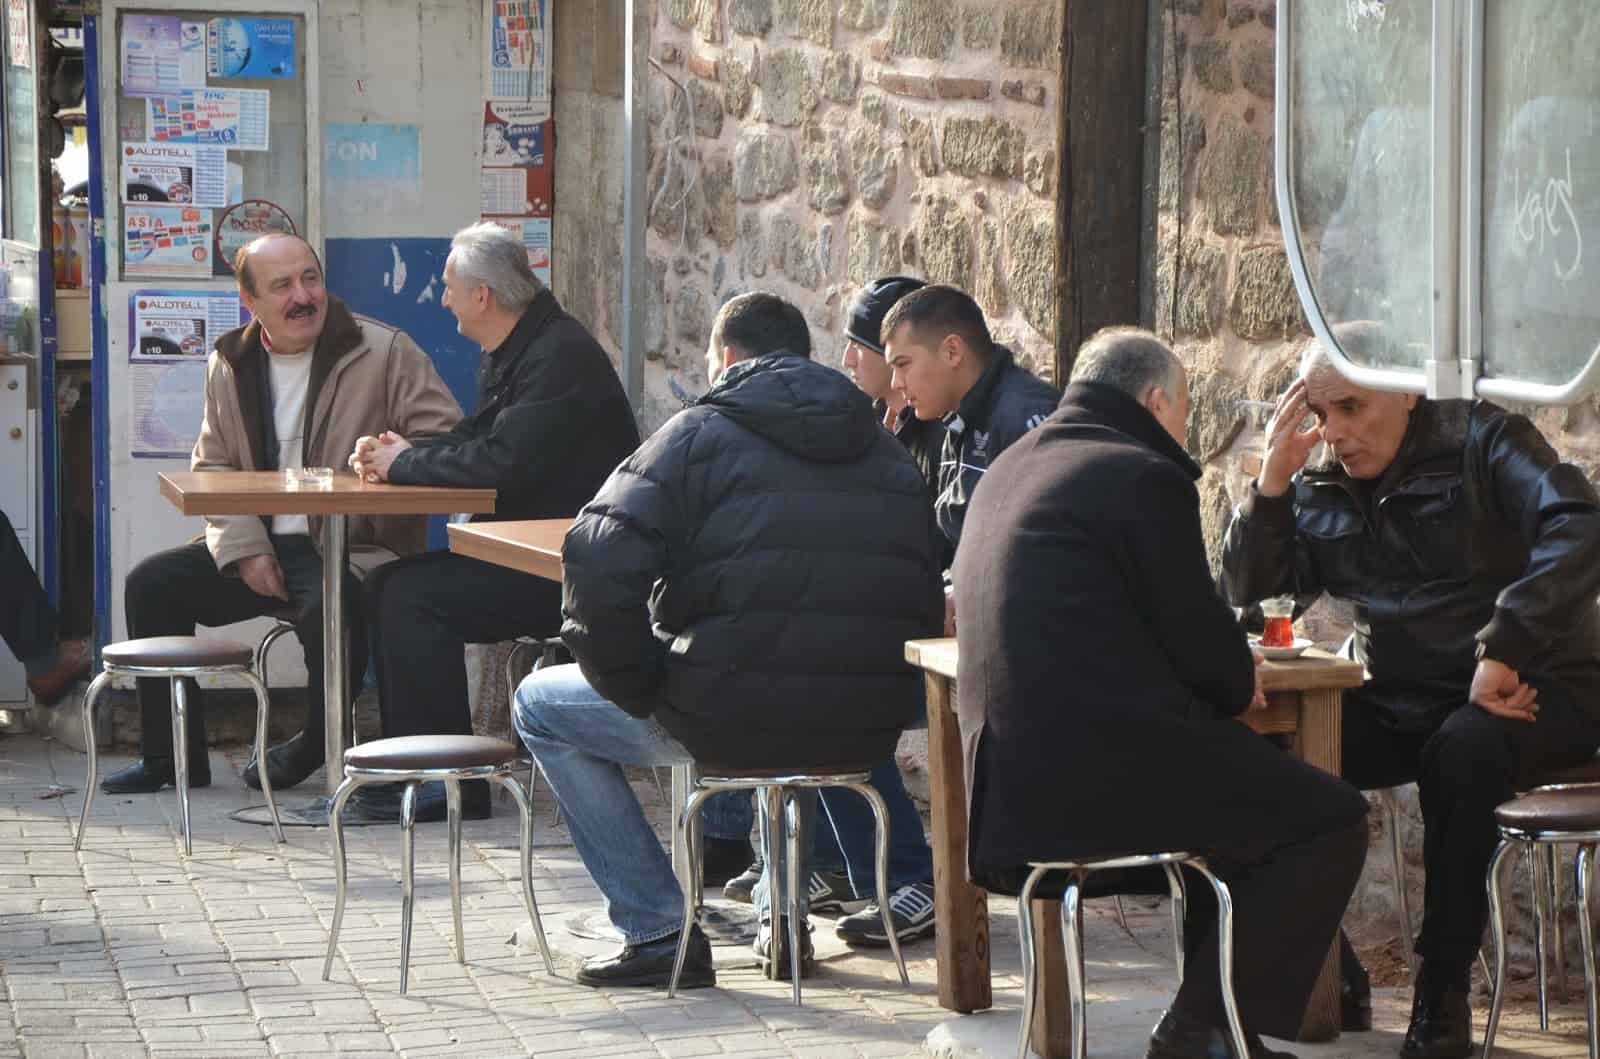 Men chatting over a glass of çay (tea) in Üsküdar, Istanbul, Turkey